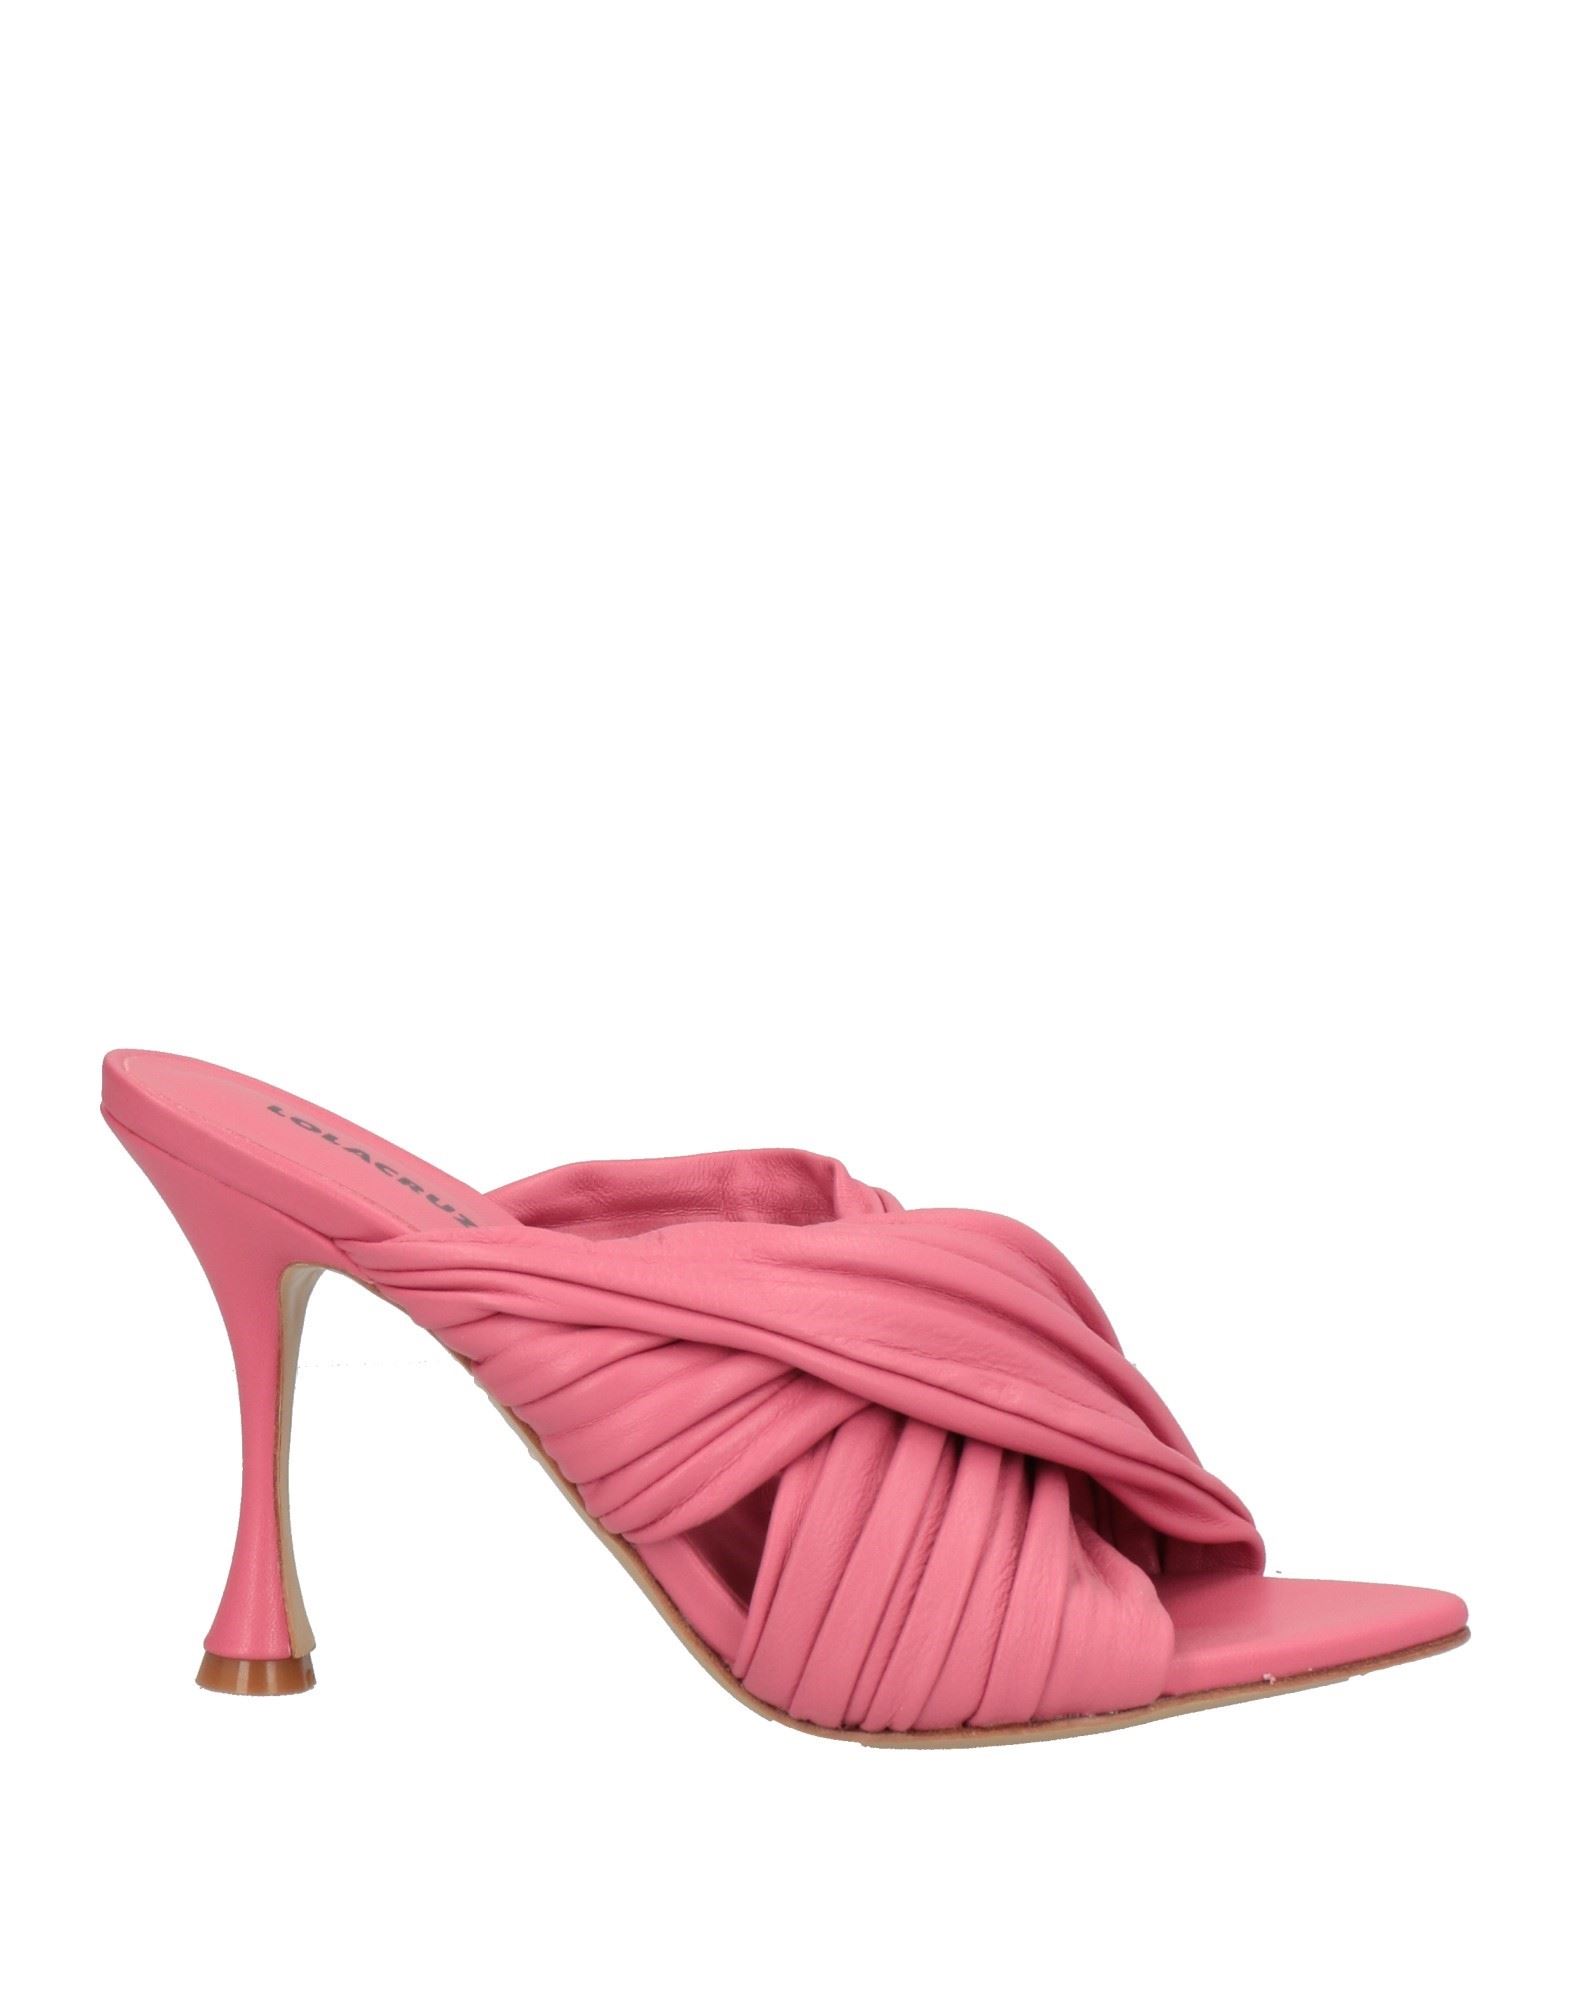 Shop Lola Cruz Woman Sandals Pink Size 7 Soft Leather